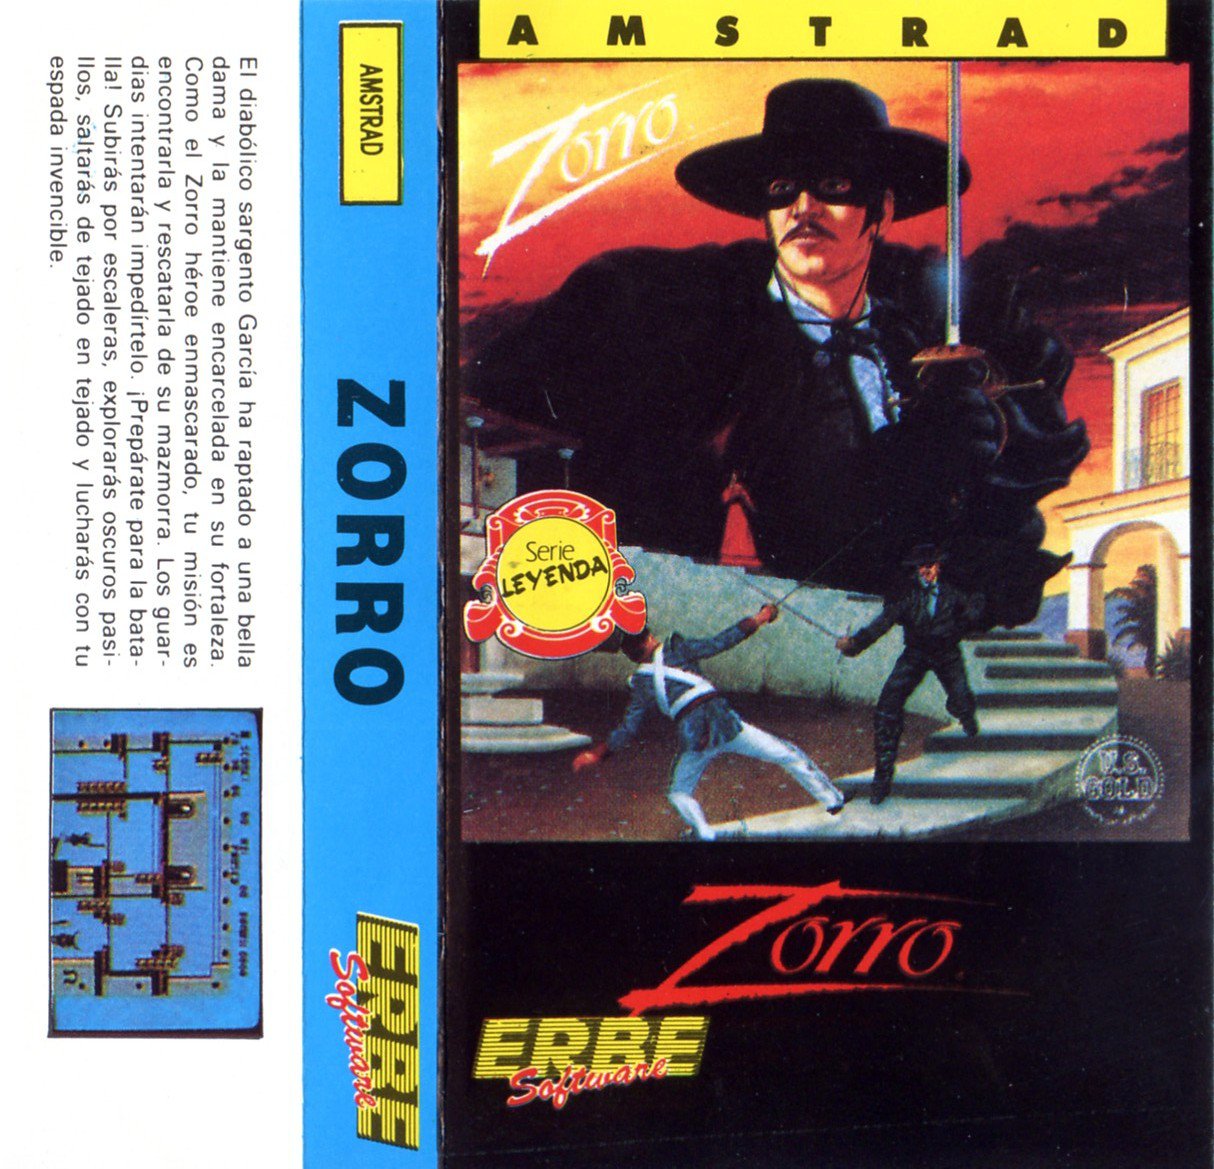 Caratula de Zorro para Amstrad CPC